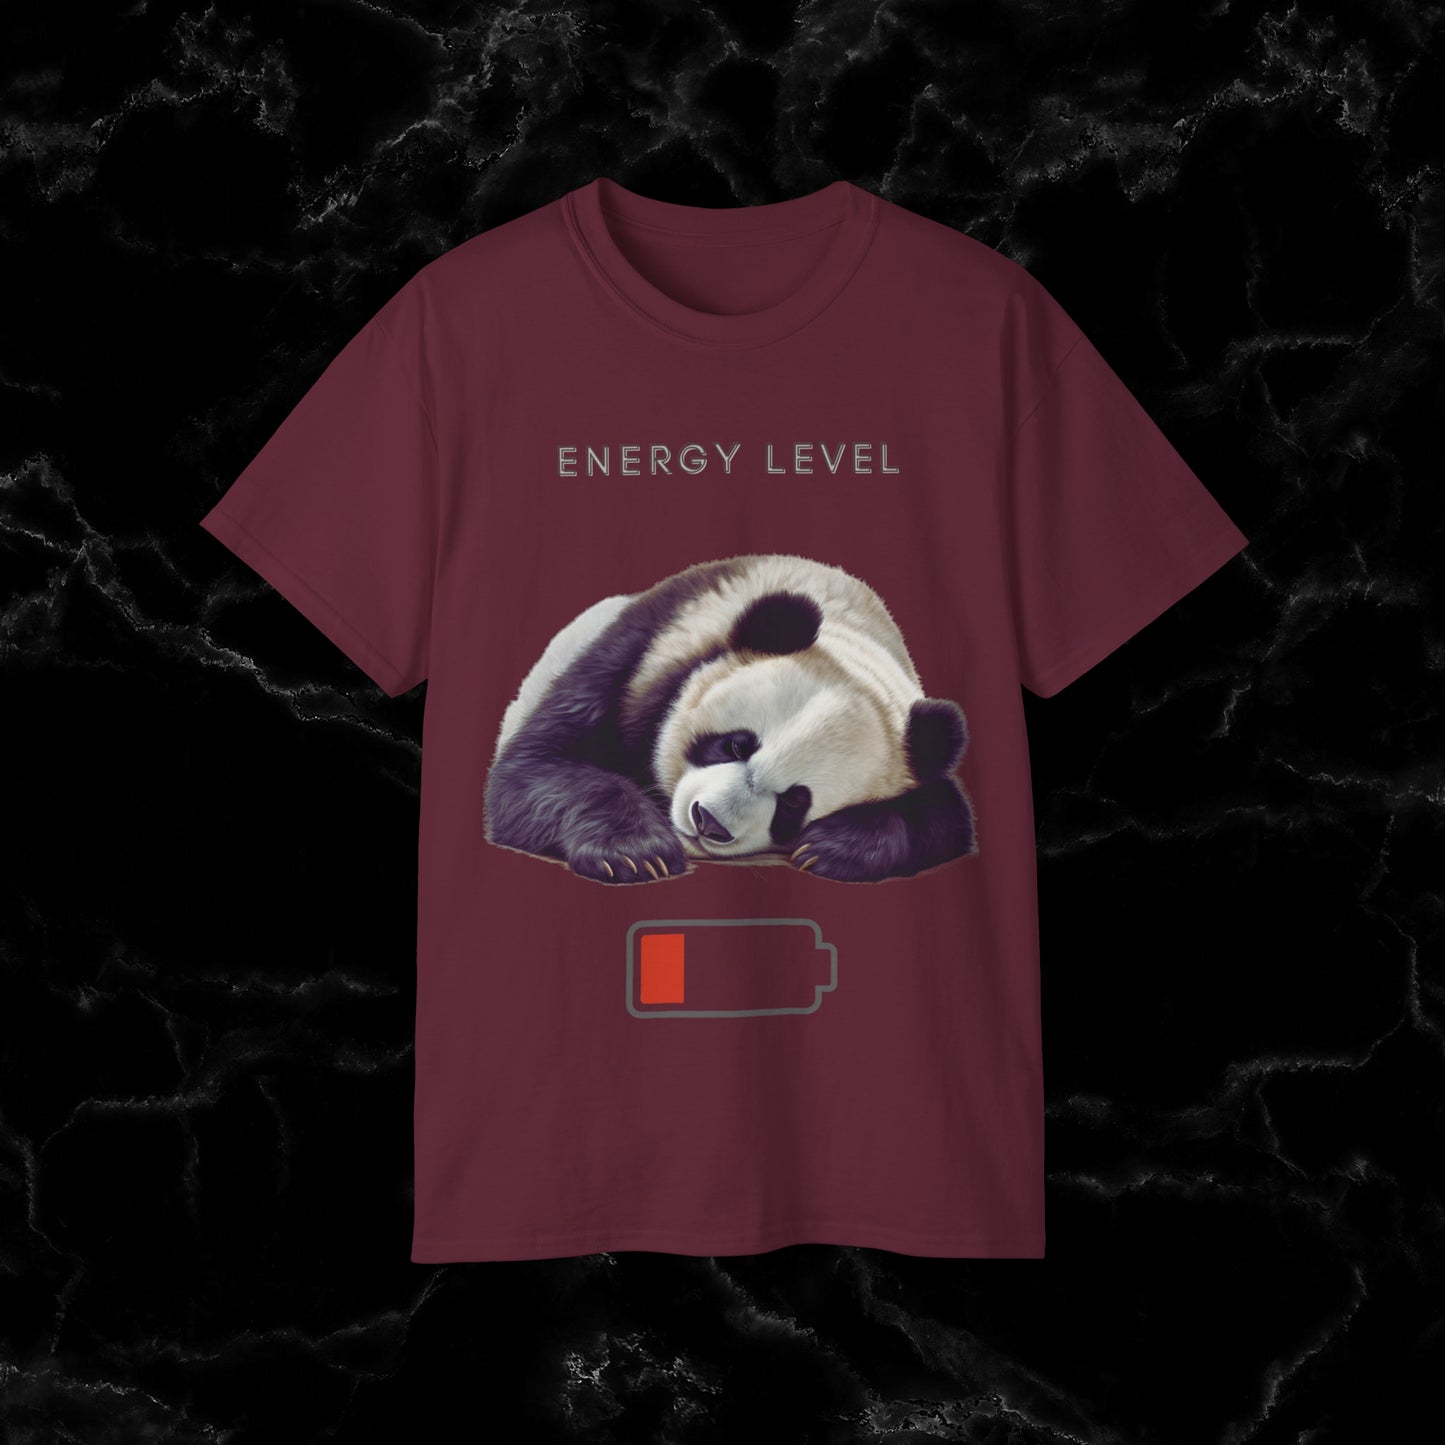 Nap Time Panda Unisex Funny Tee - Hilarious Panda Nap Design - Energy Level T-Shirt Maroon S 